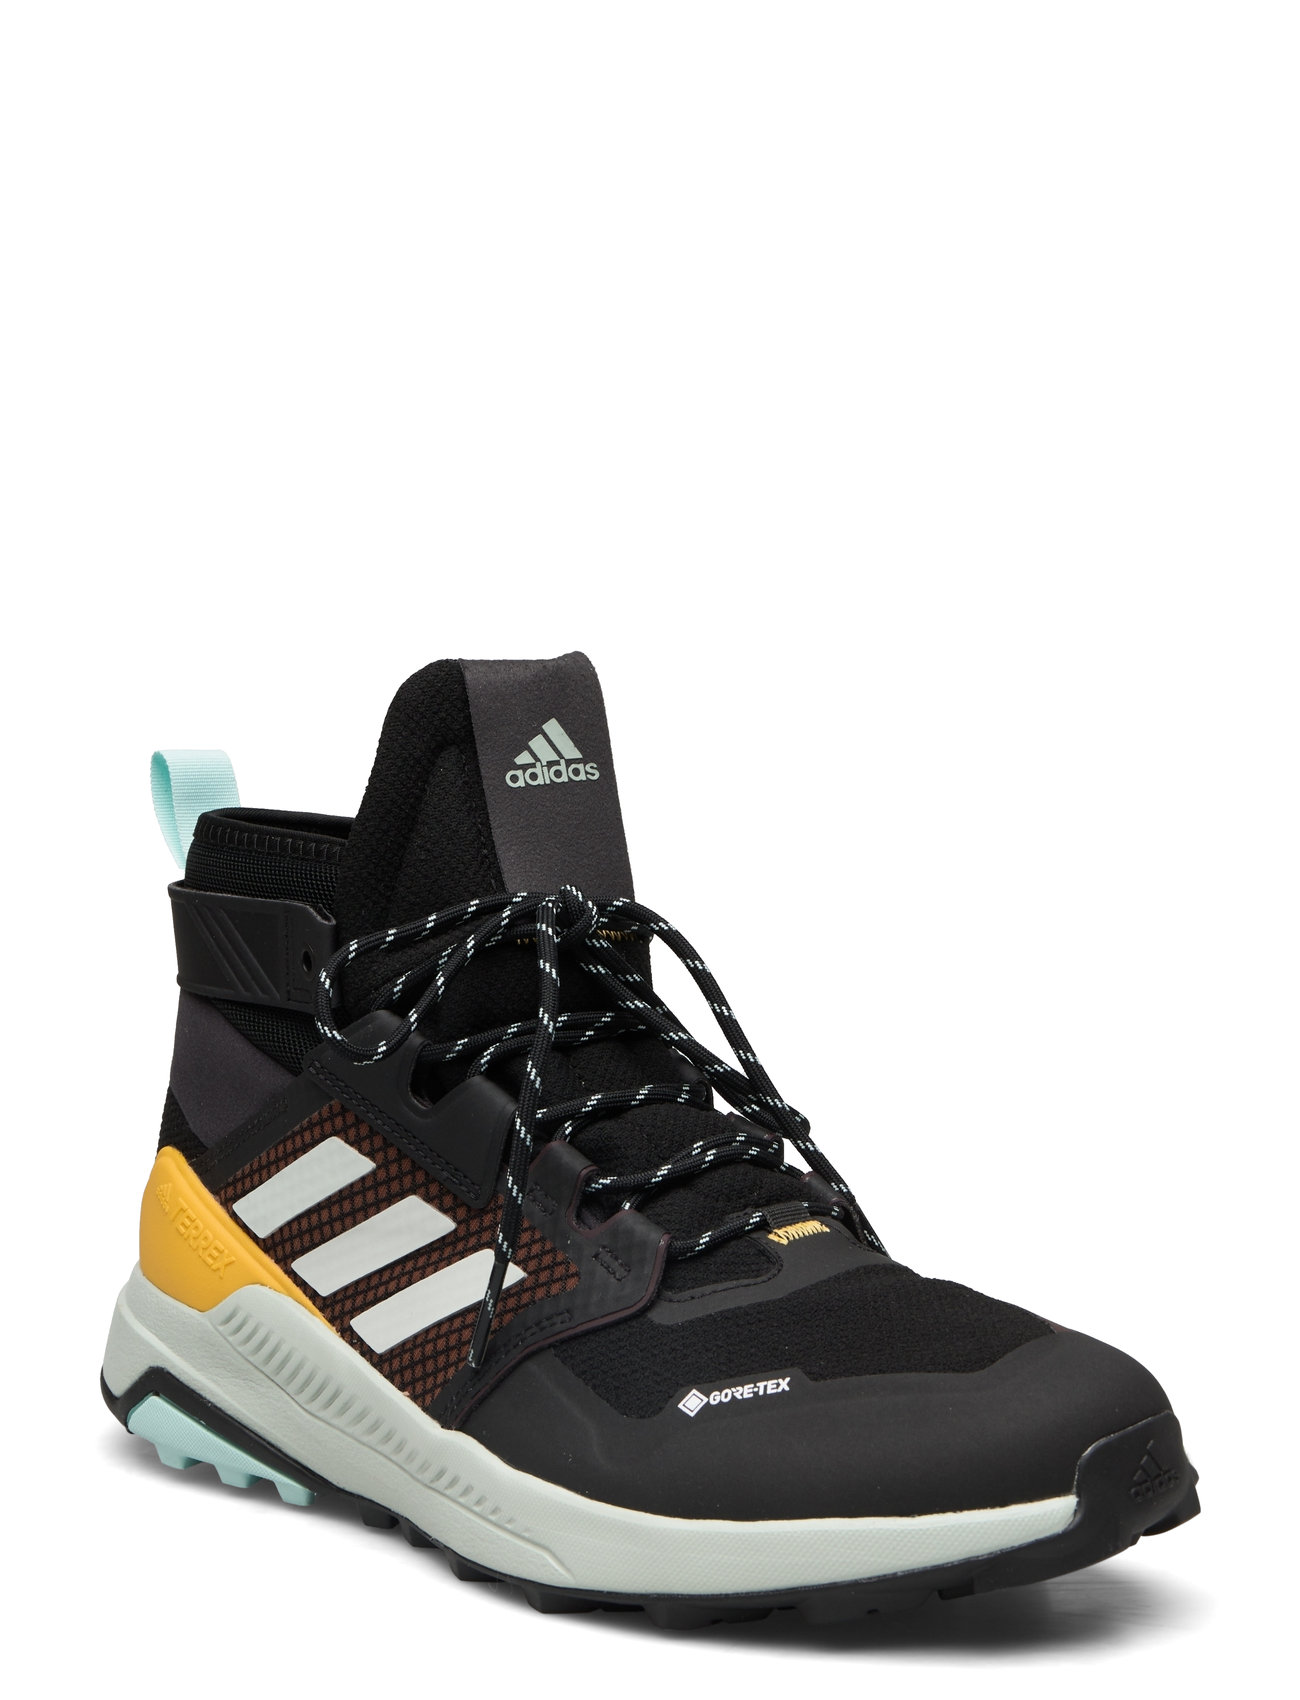 "adidas Terrex" "Terrex Trailmaker Mid Gore-Tex Hiking Shoes Sport Outdoor-hiking Black Adidas